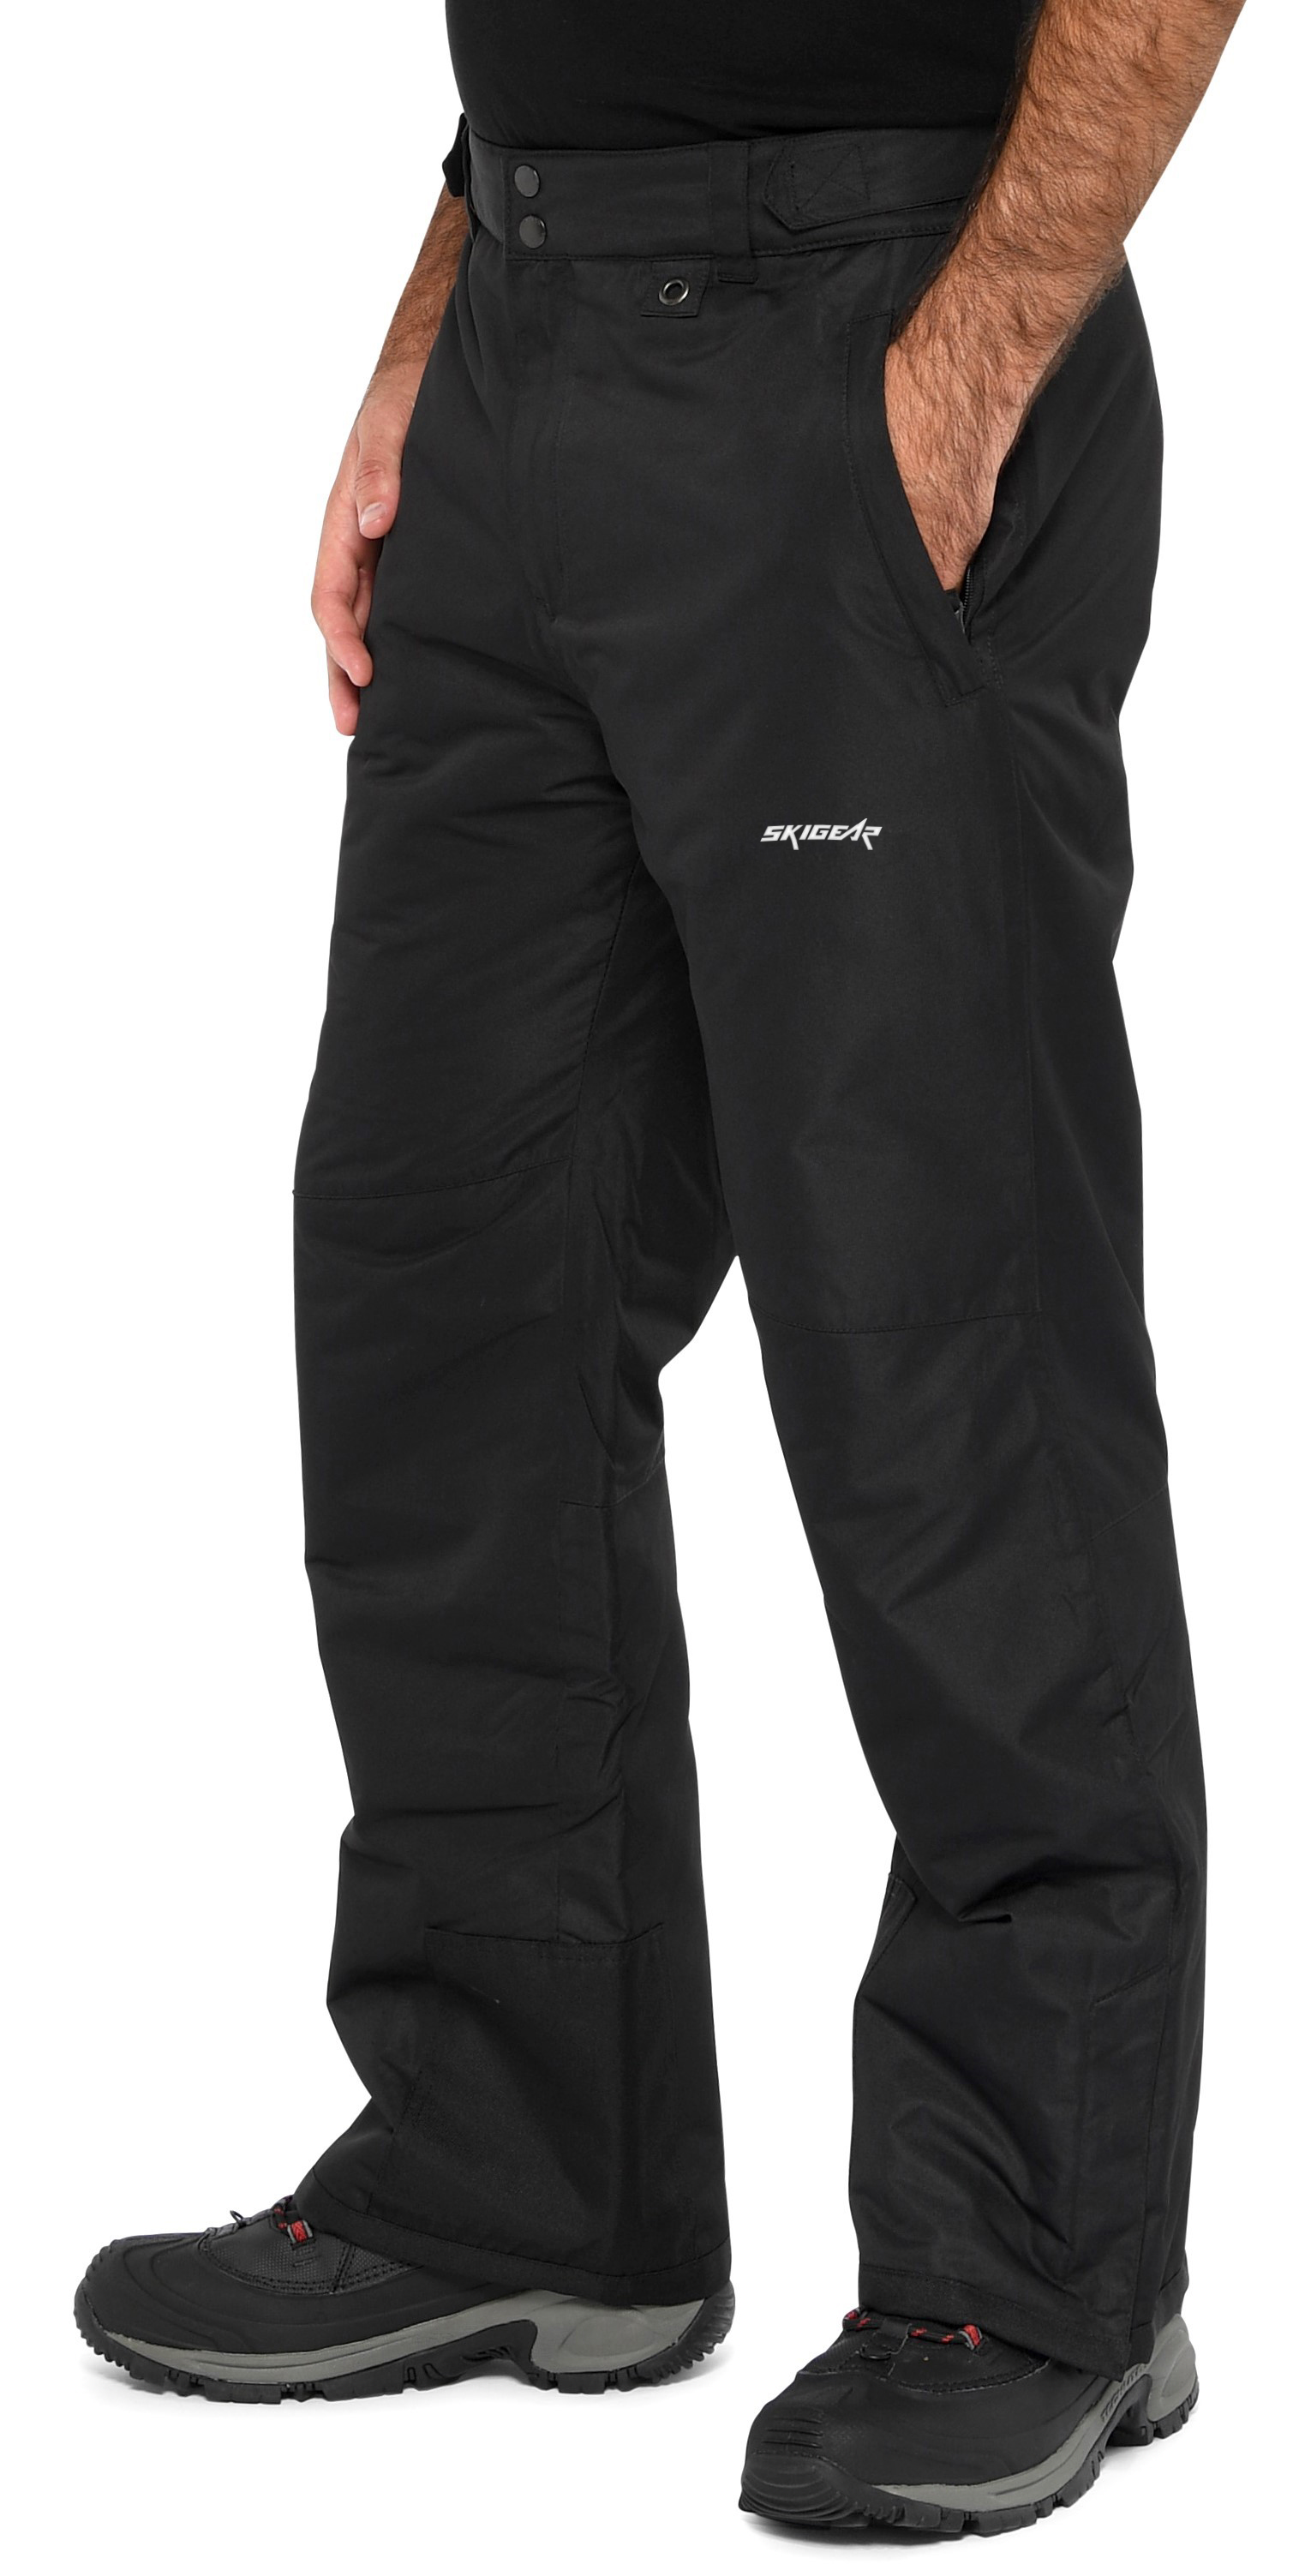 SkiGear by Arctix Men's Essential Snow Pants Pant 30" Short - image 1 of 4